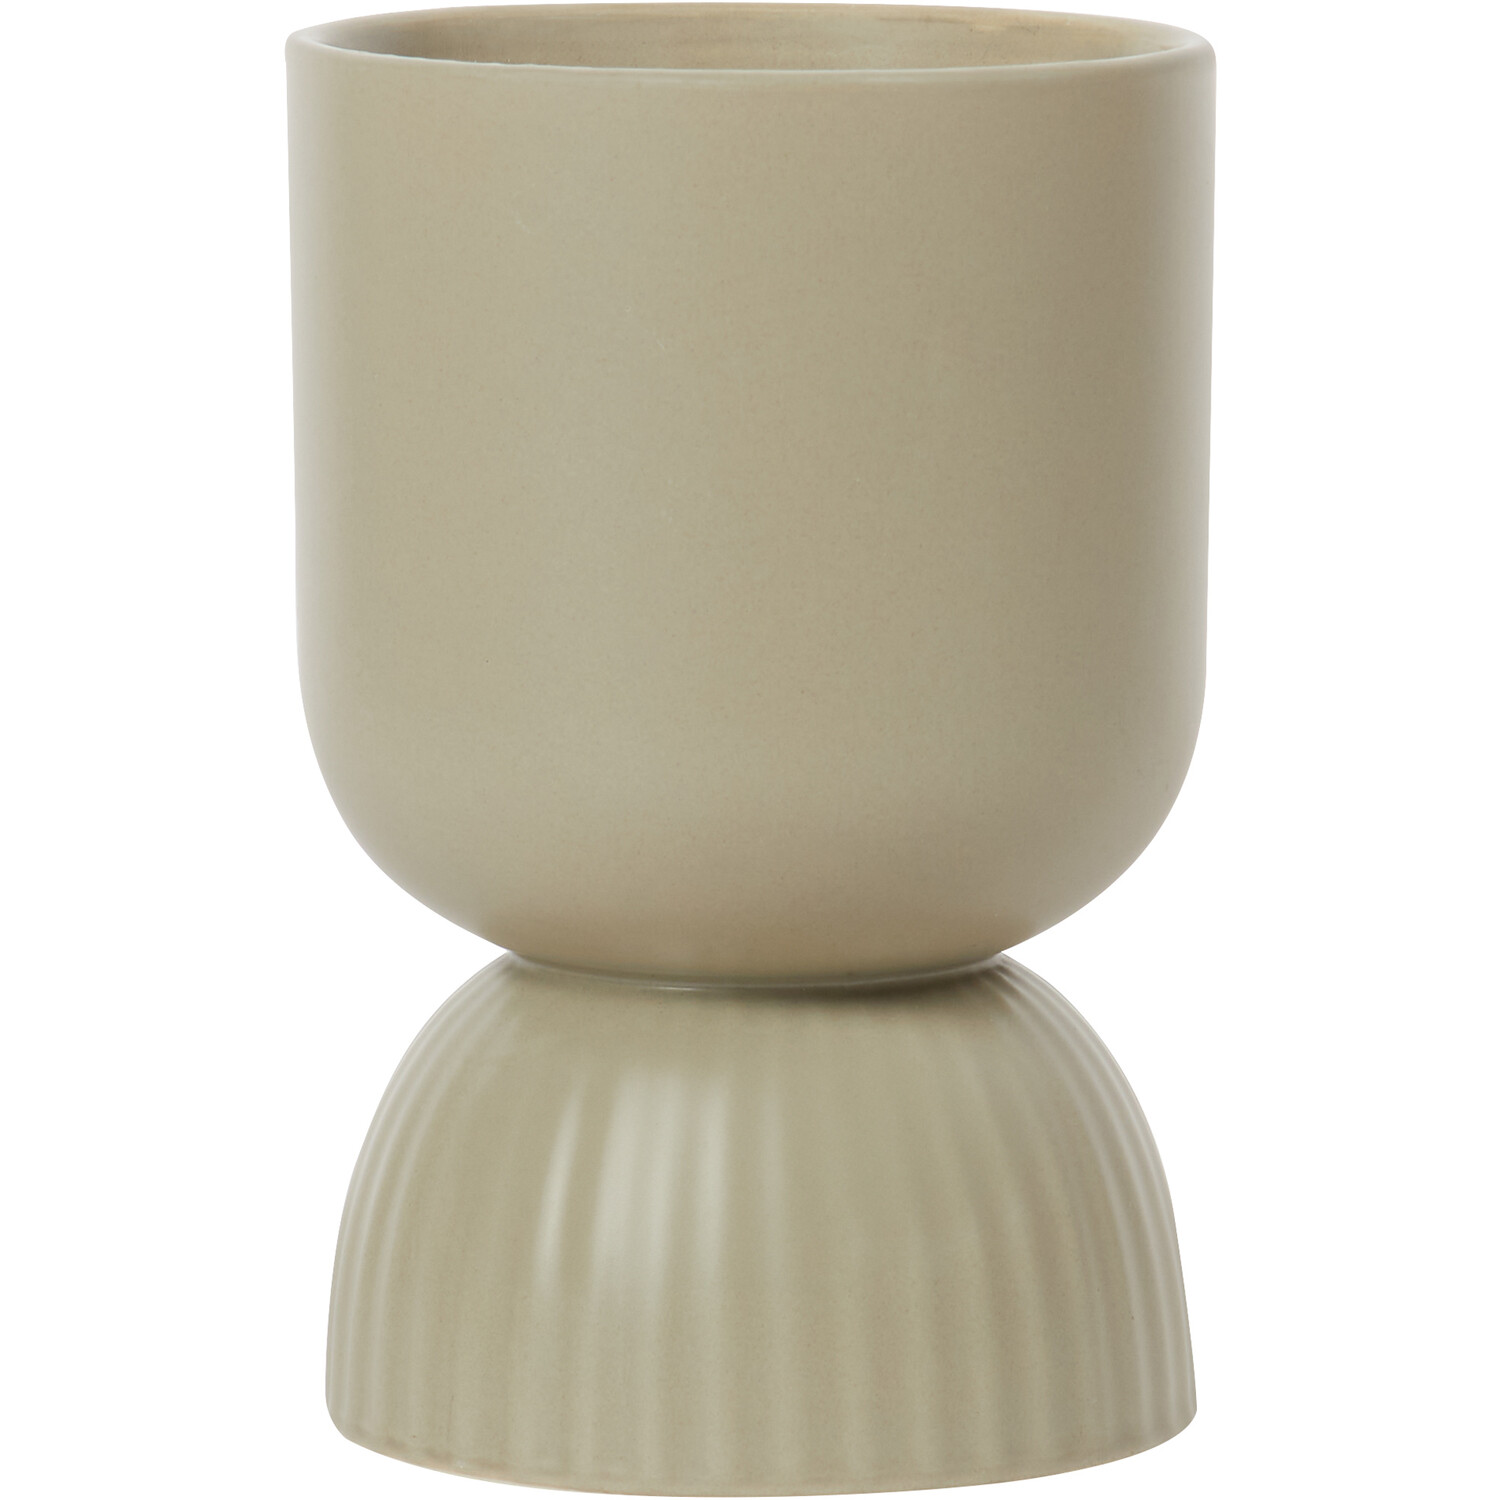 Cashmere Suede Ceramic Candle - Natural Image 1